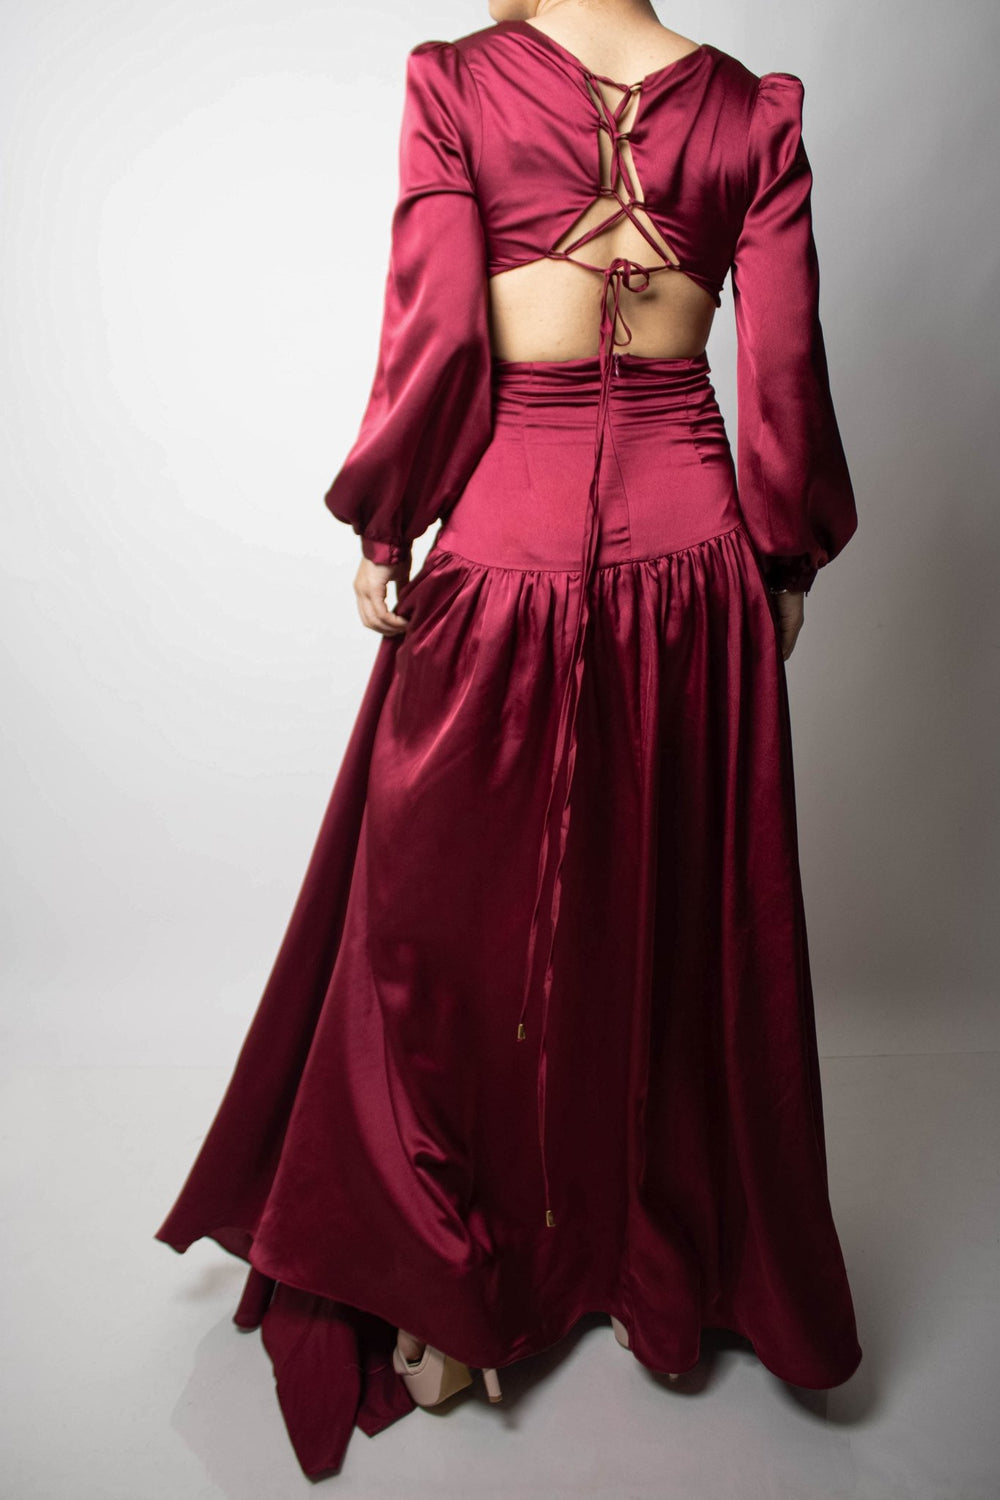 Anais - rojo - Lend the Trend renta de vestidos mexico